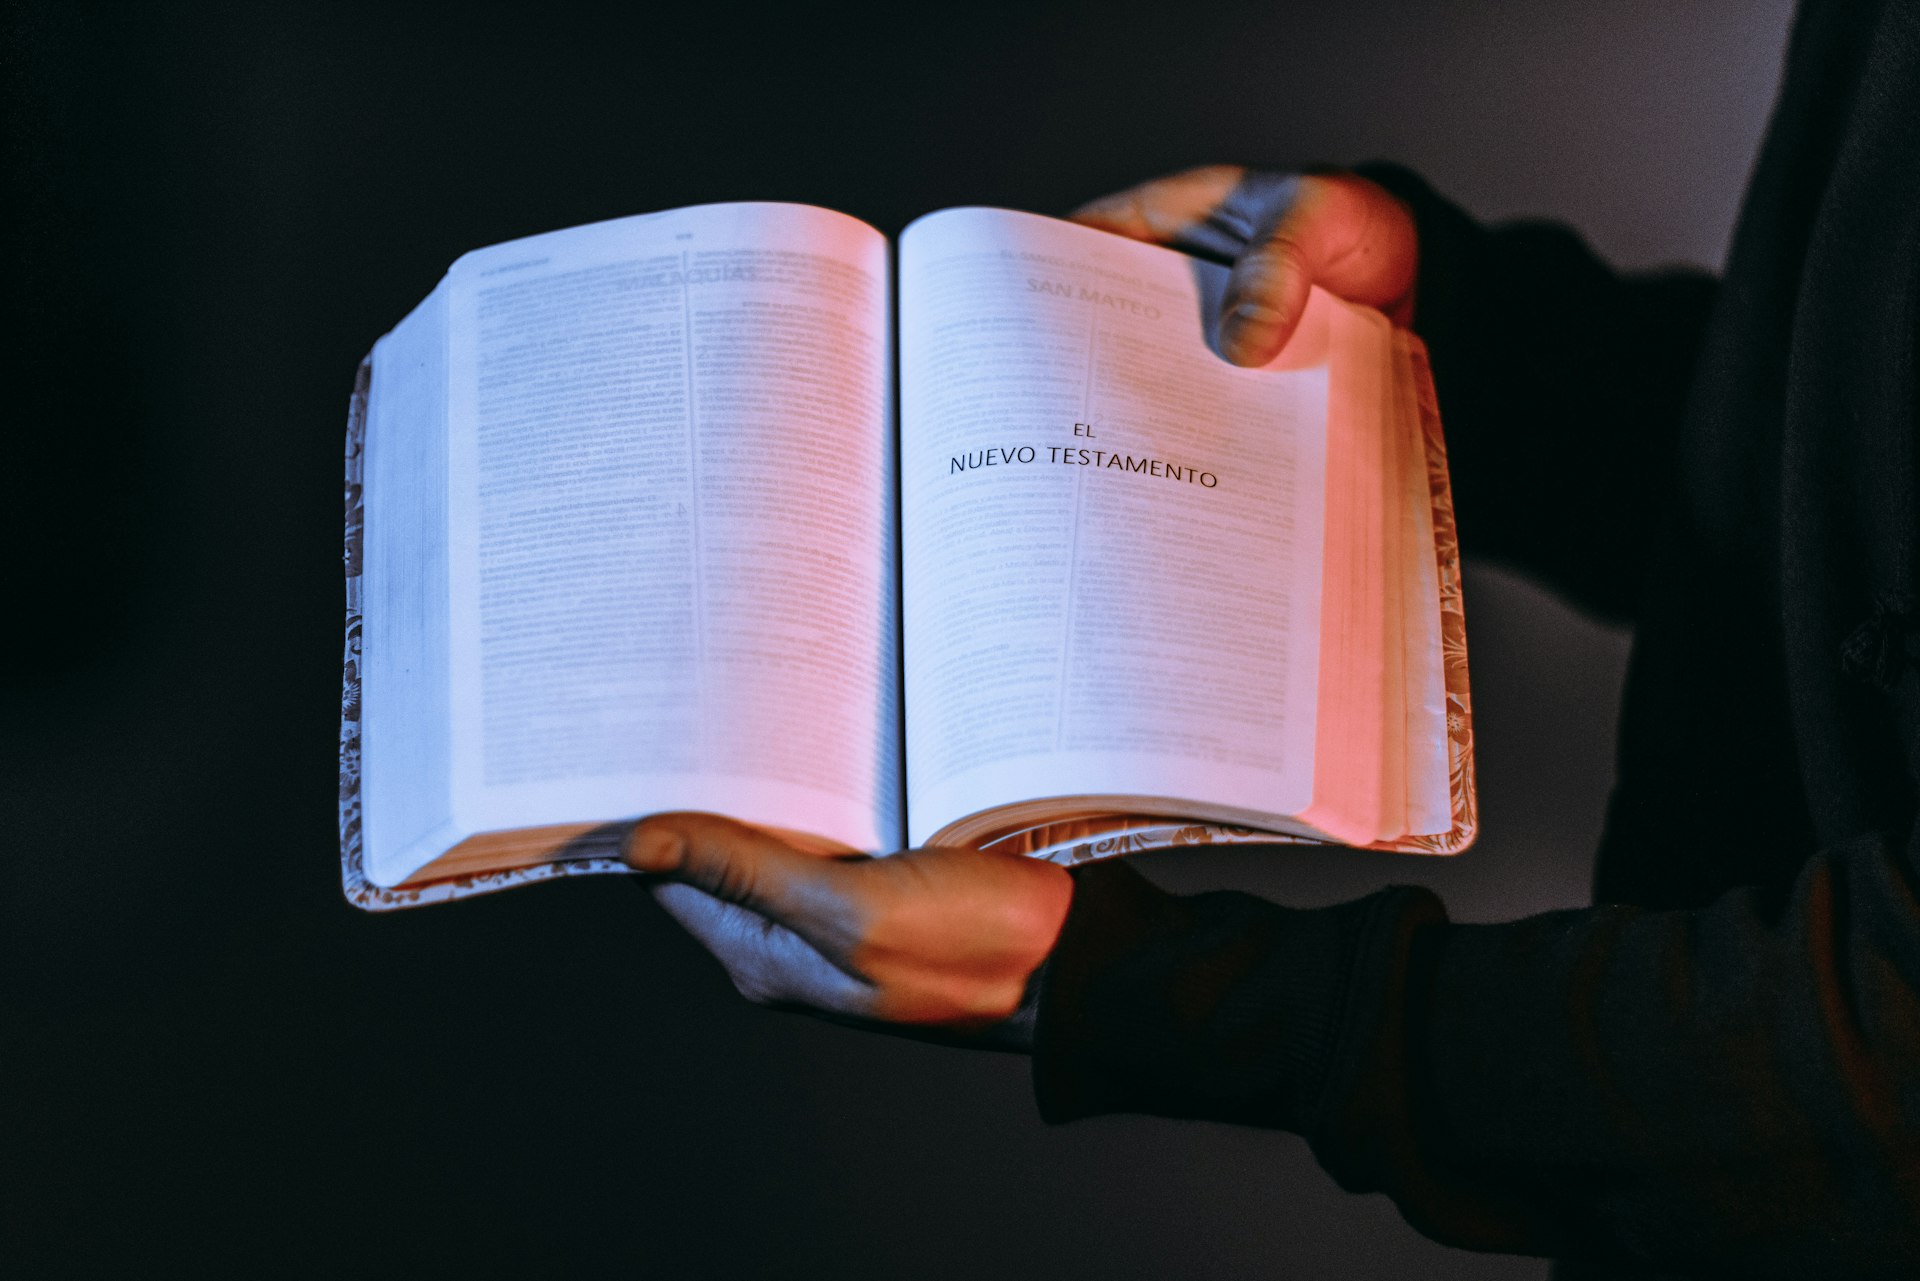 person holding book showing Nuevo Testamento